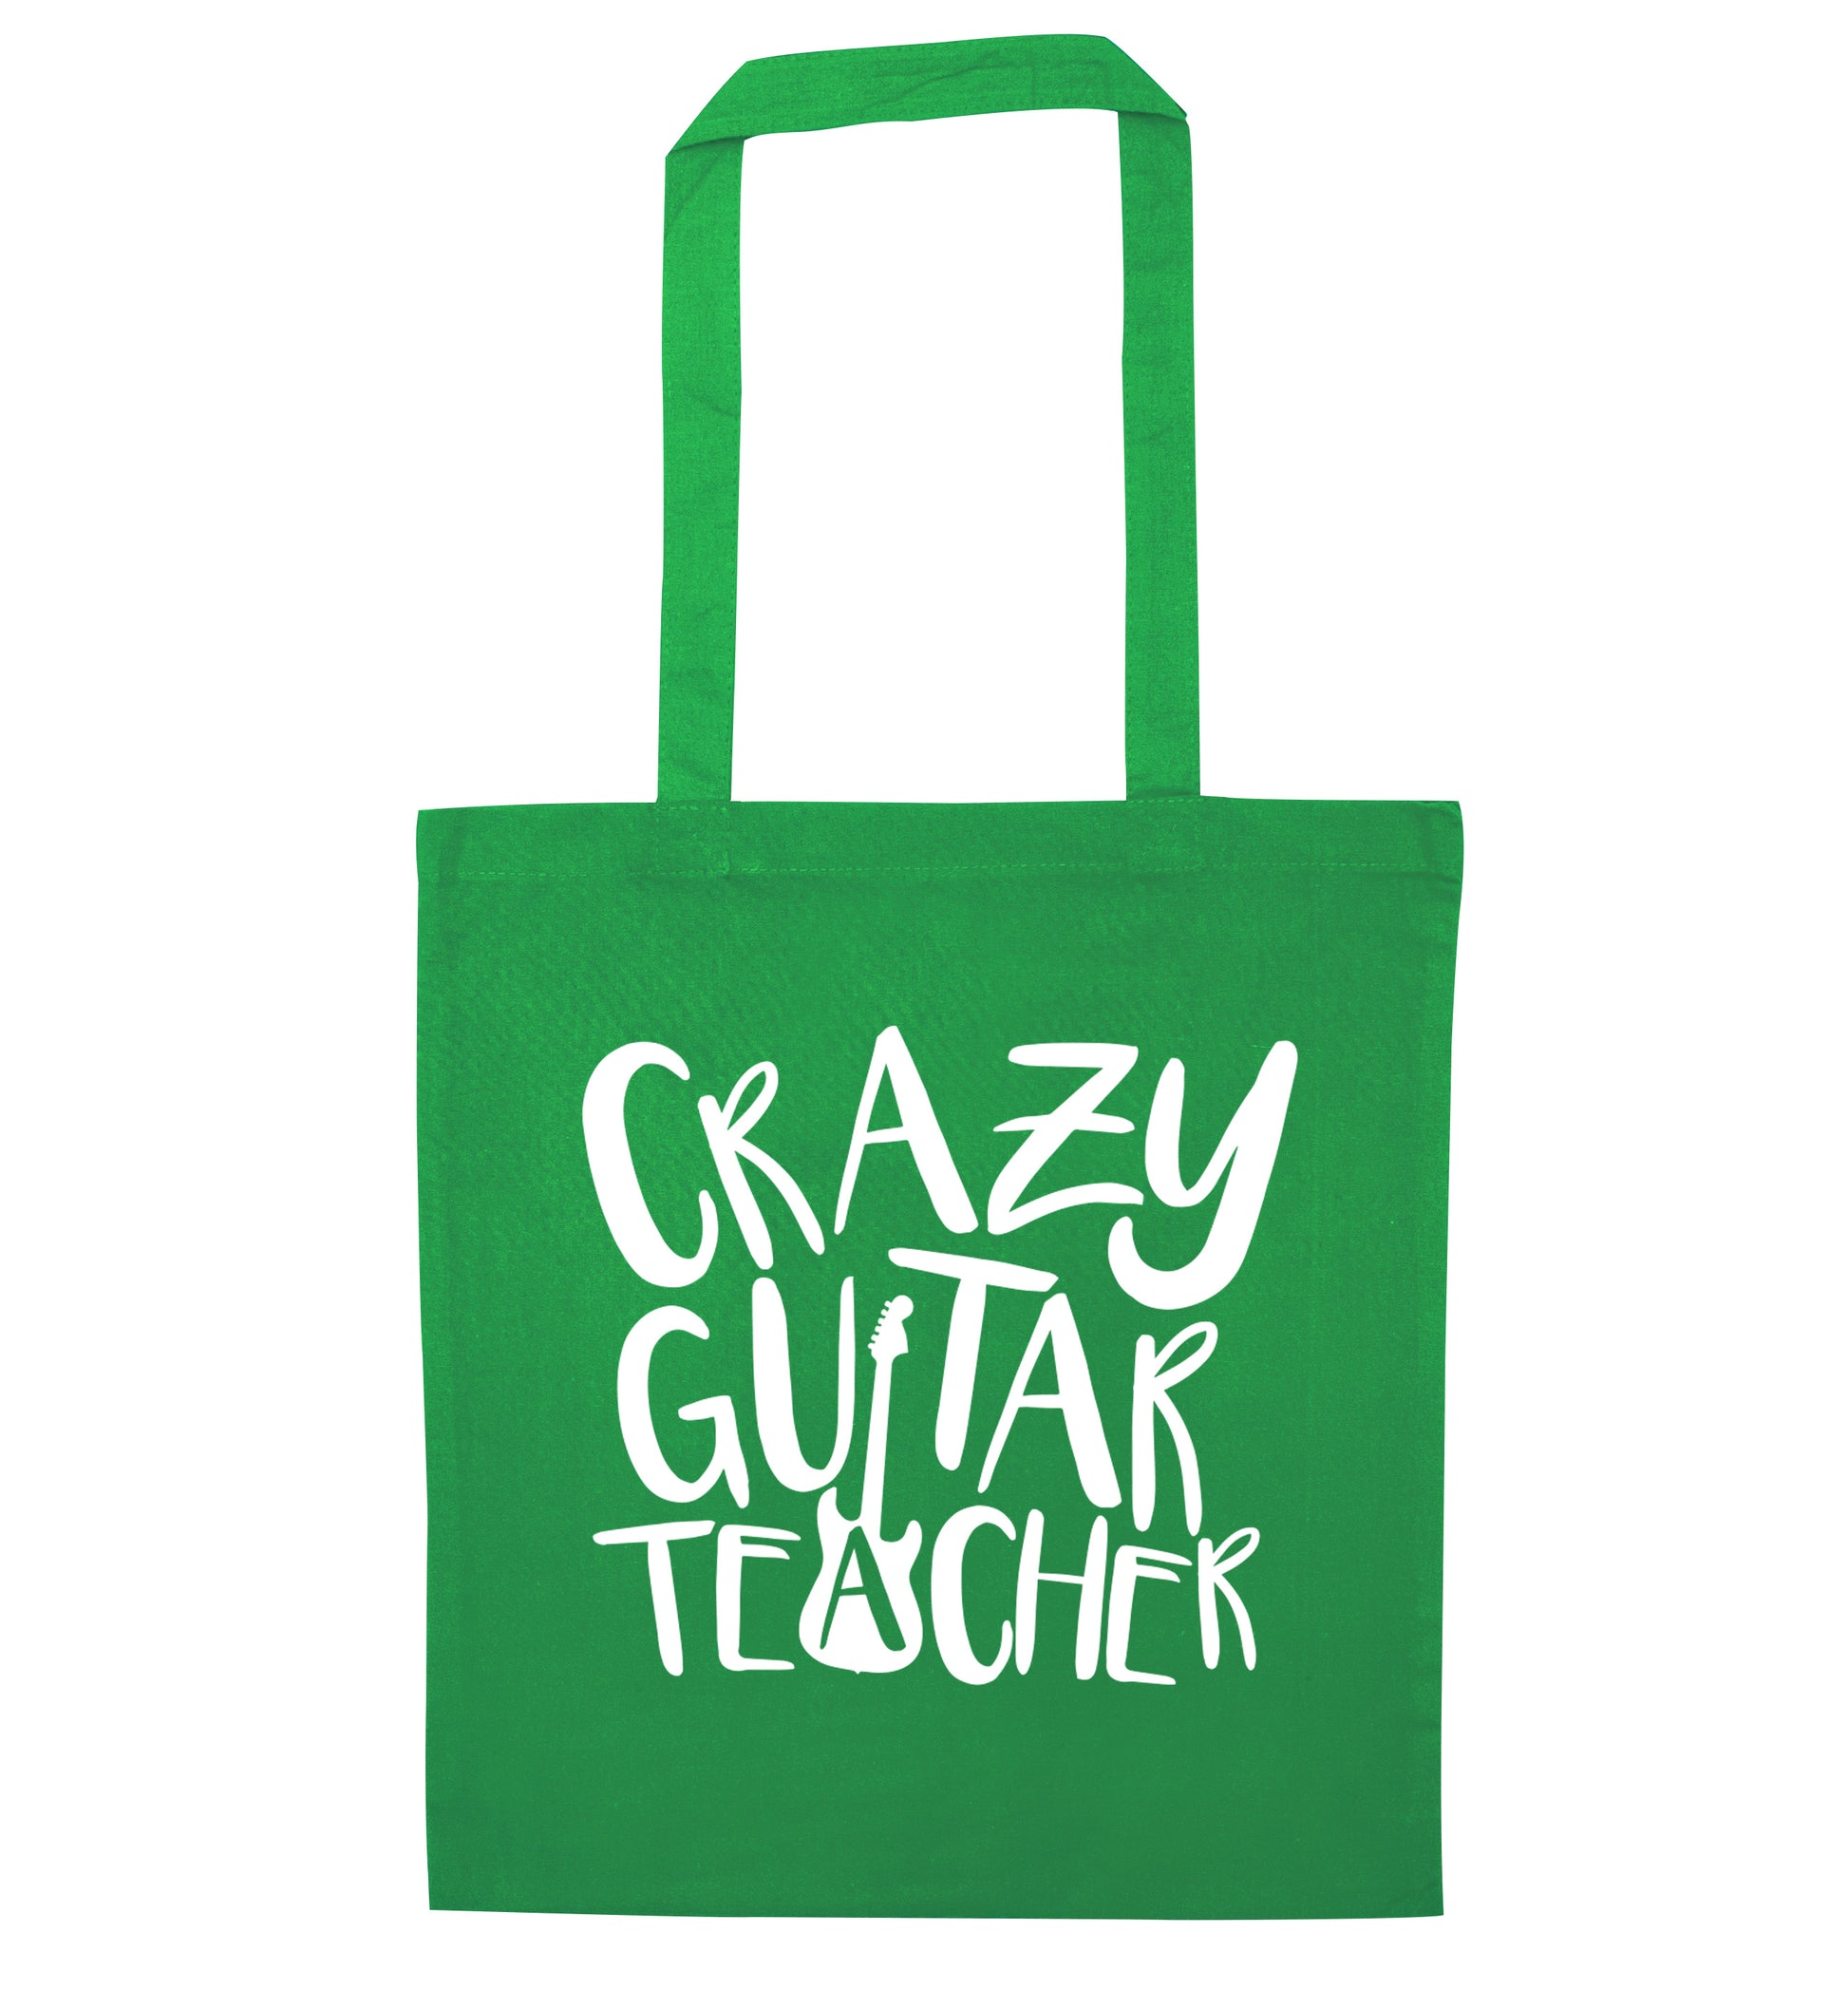 Crazy guitar teacher green tote bag